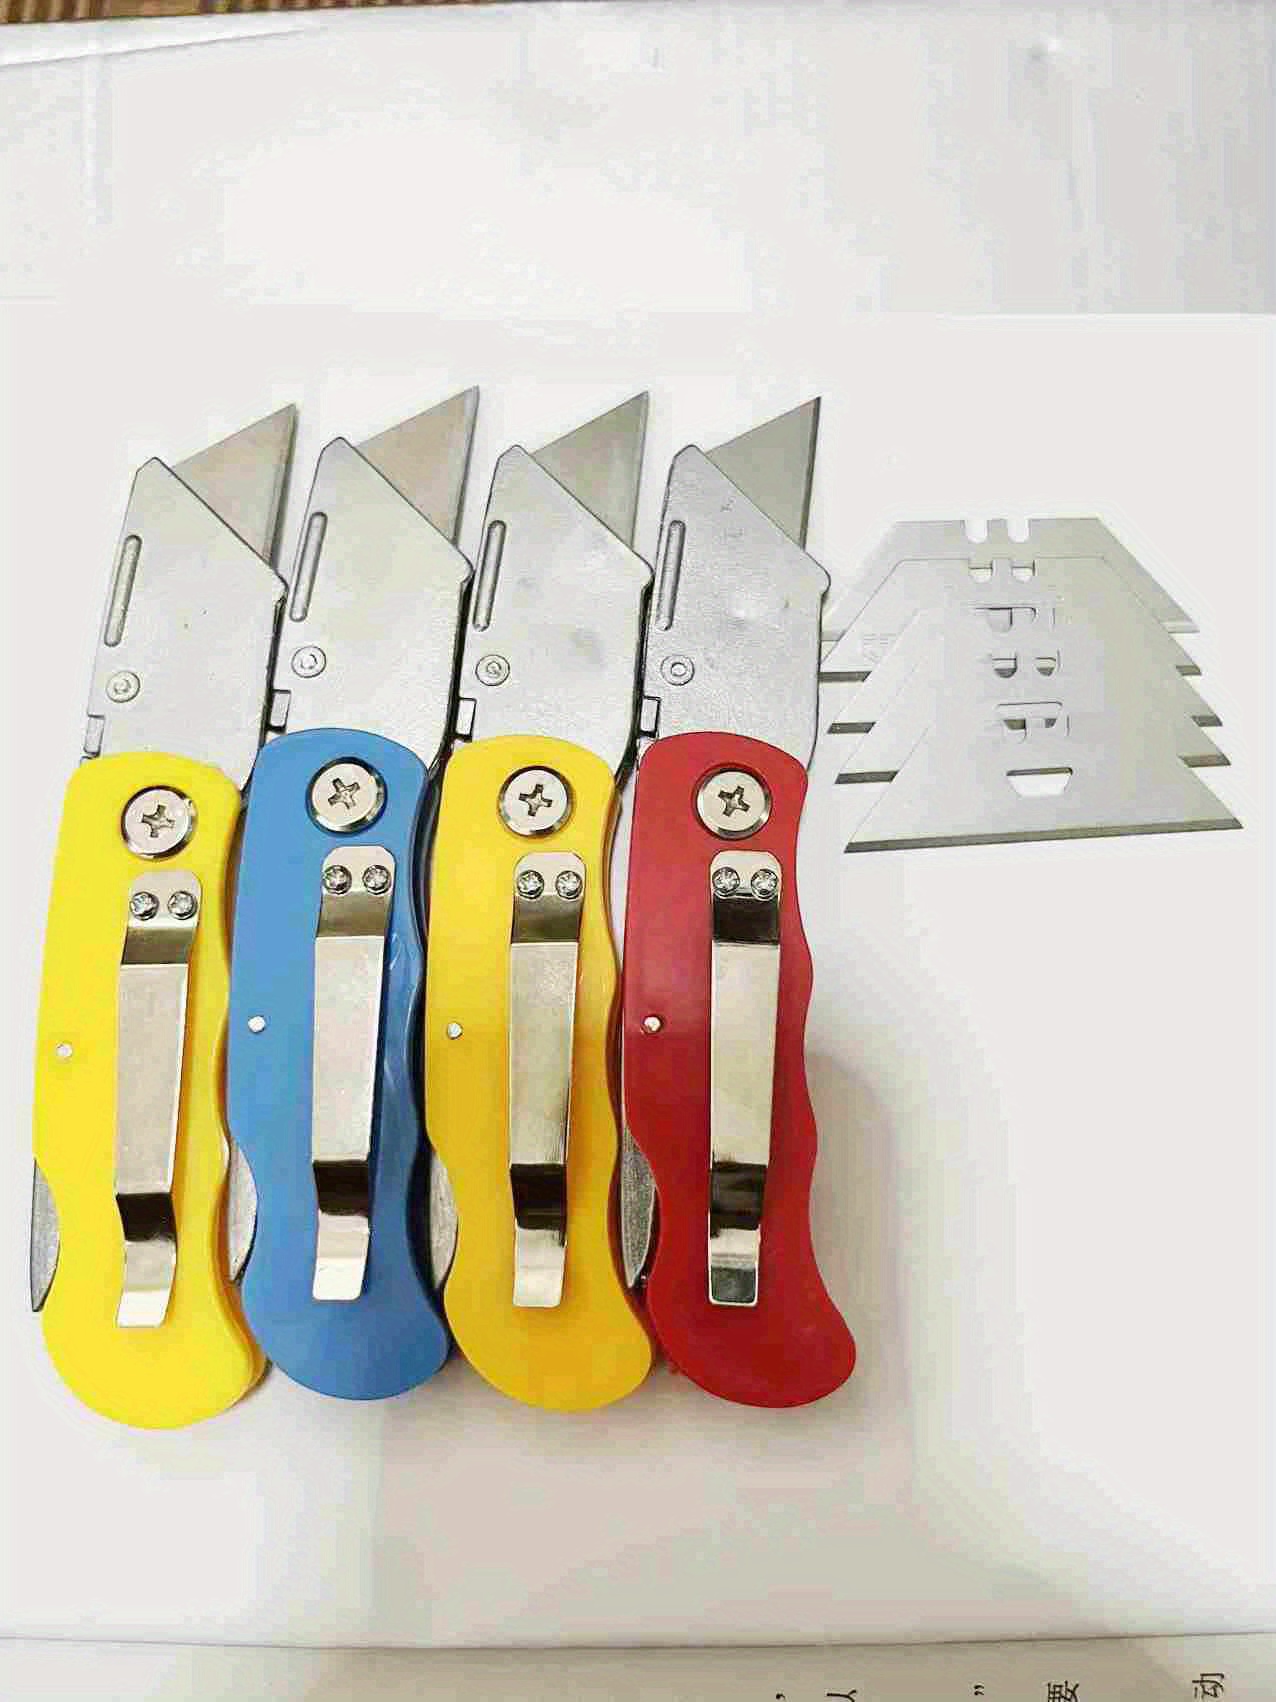 TAJIMA MULTI ELECTRIC WORK KNIFE FOLDING TYPE (CABLE CUTTING KNIFE) DK-FKMU